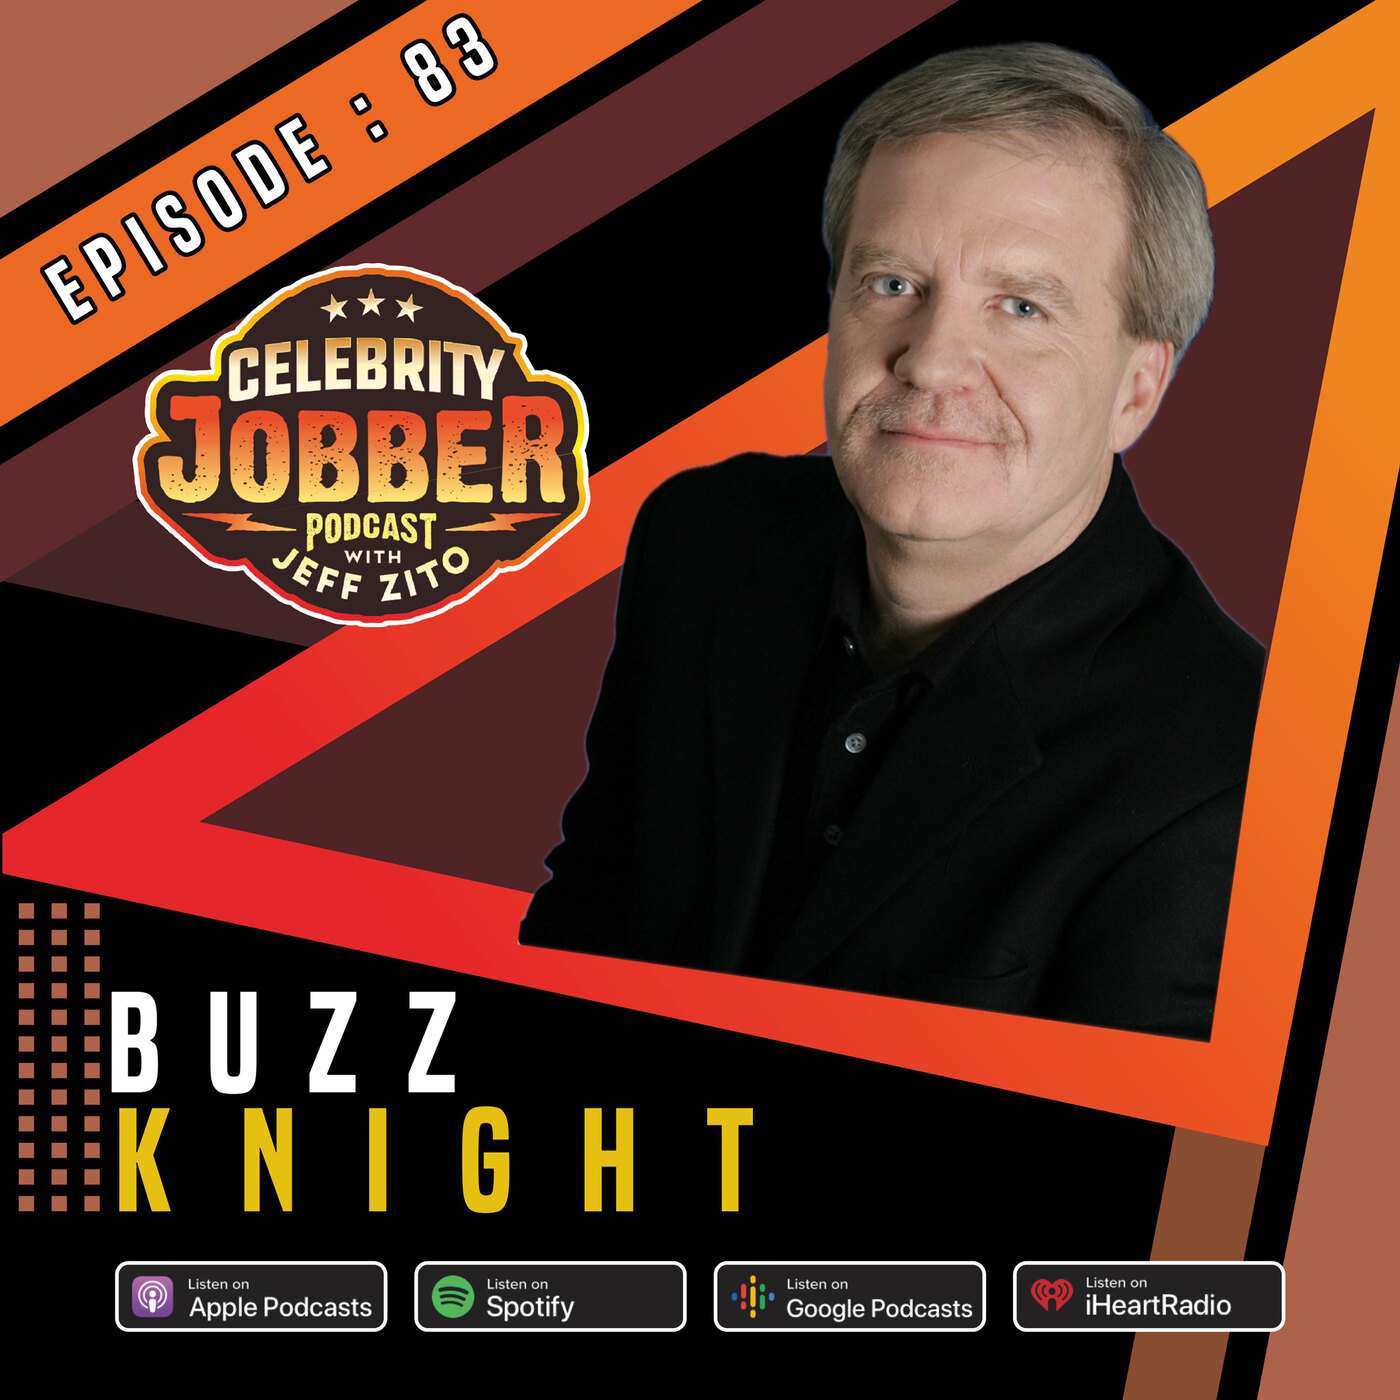 Celebrity Jobber with Jeff Zito - Buzz Knight Radio Executive